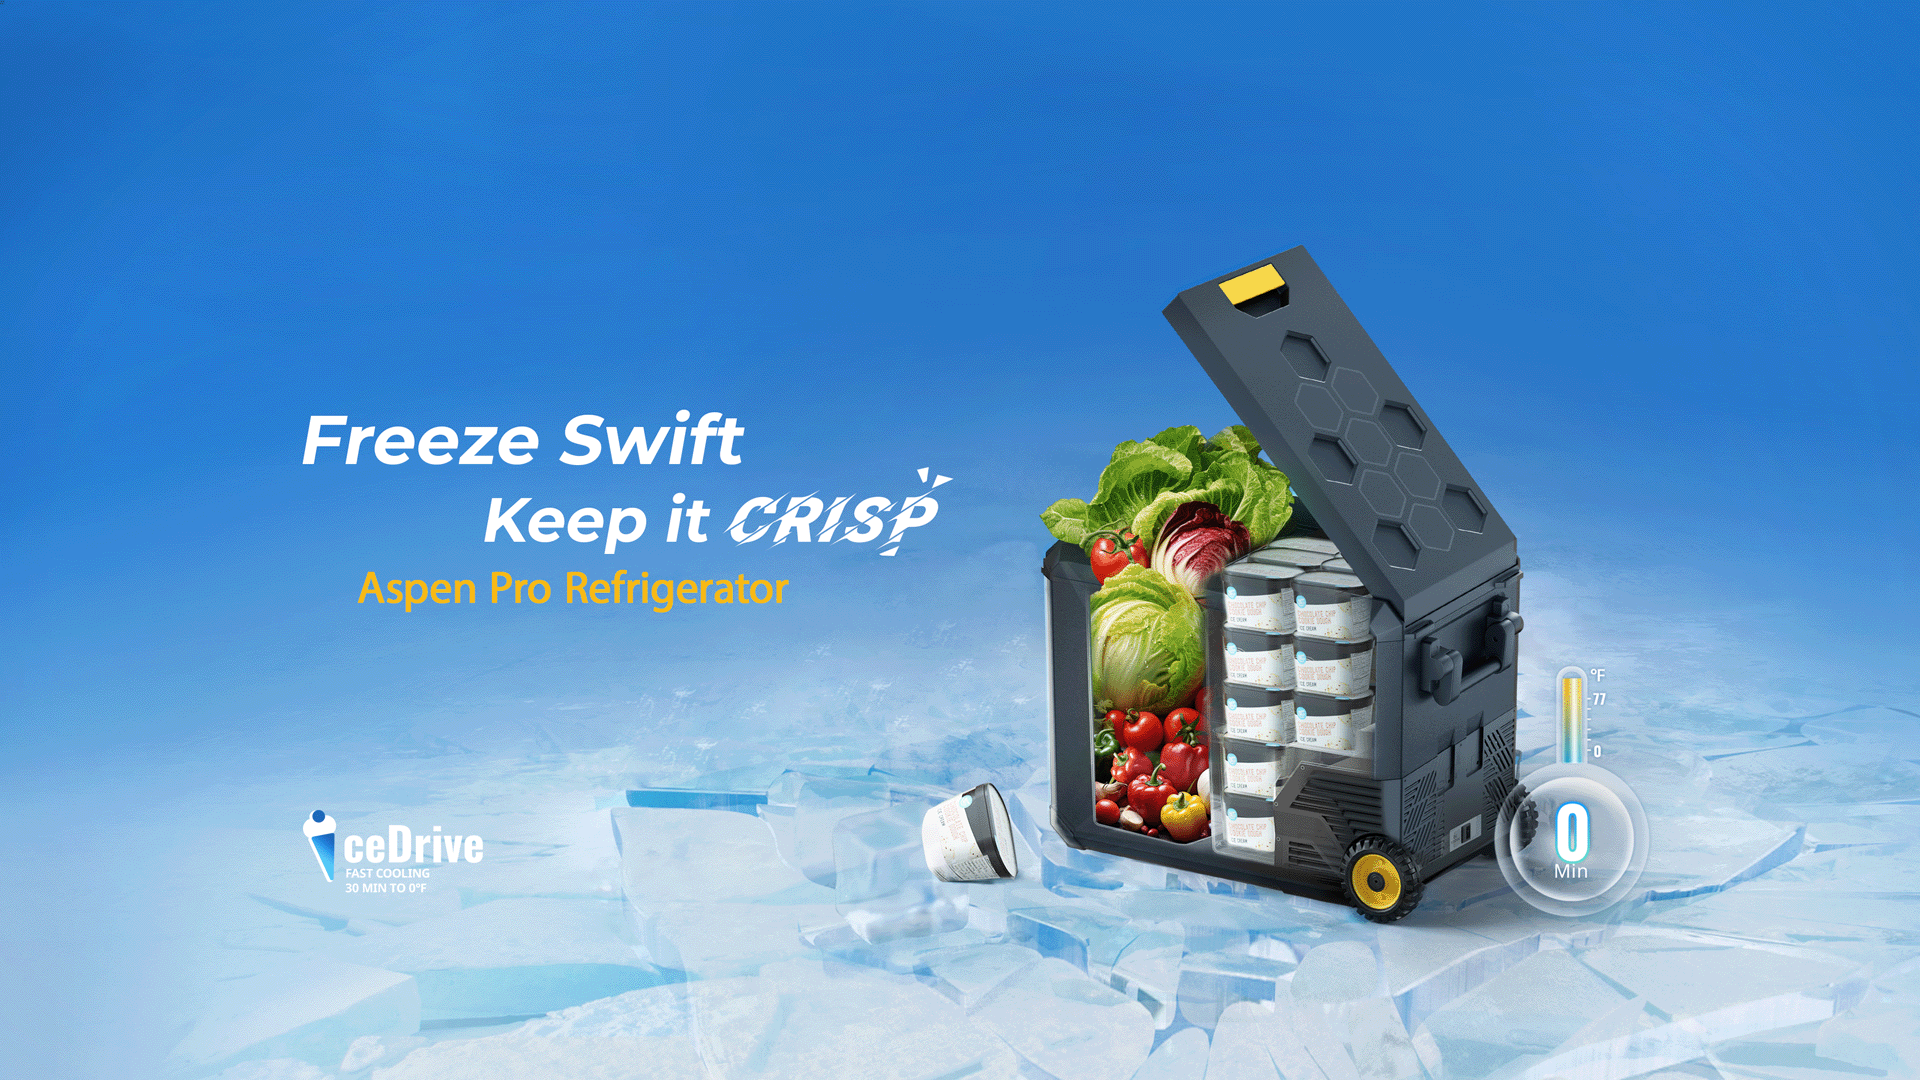 aspen pro refrigerator-freeze swift,keep it crisp